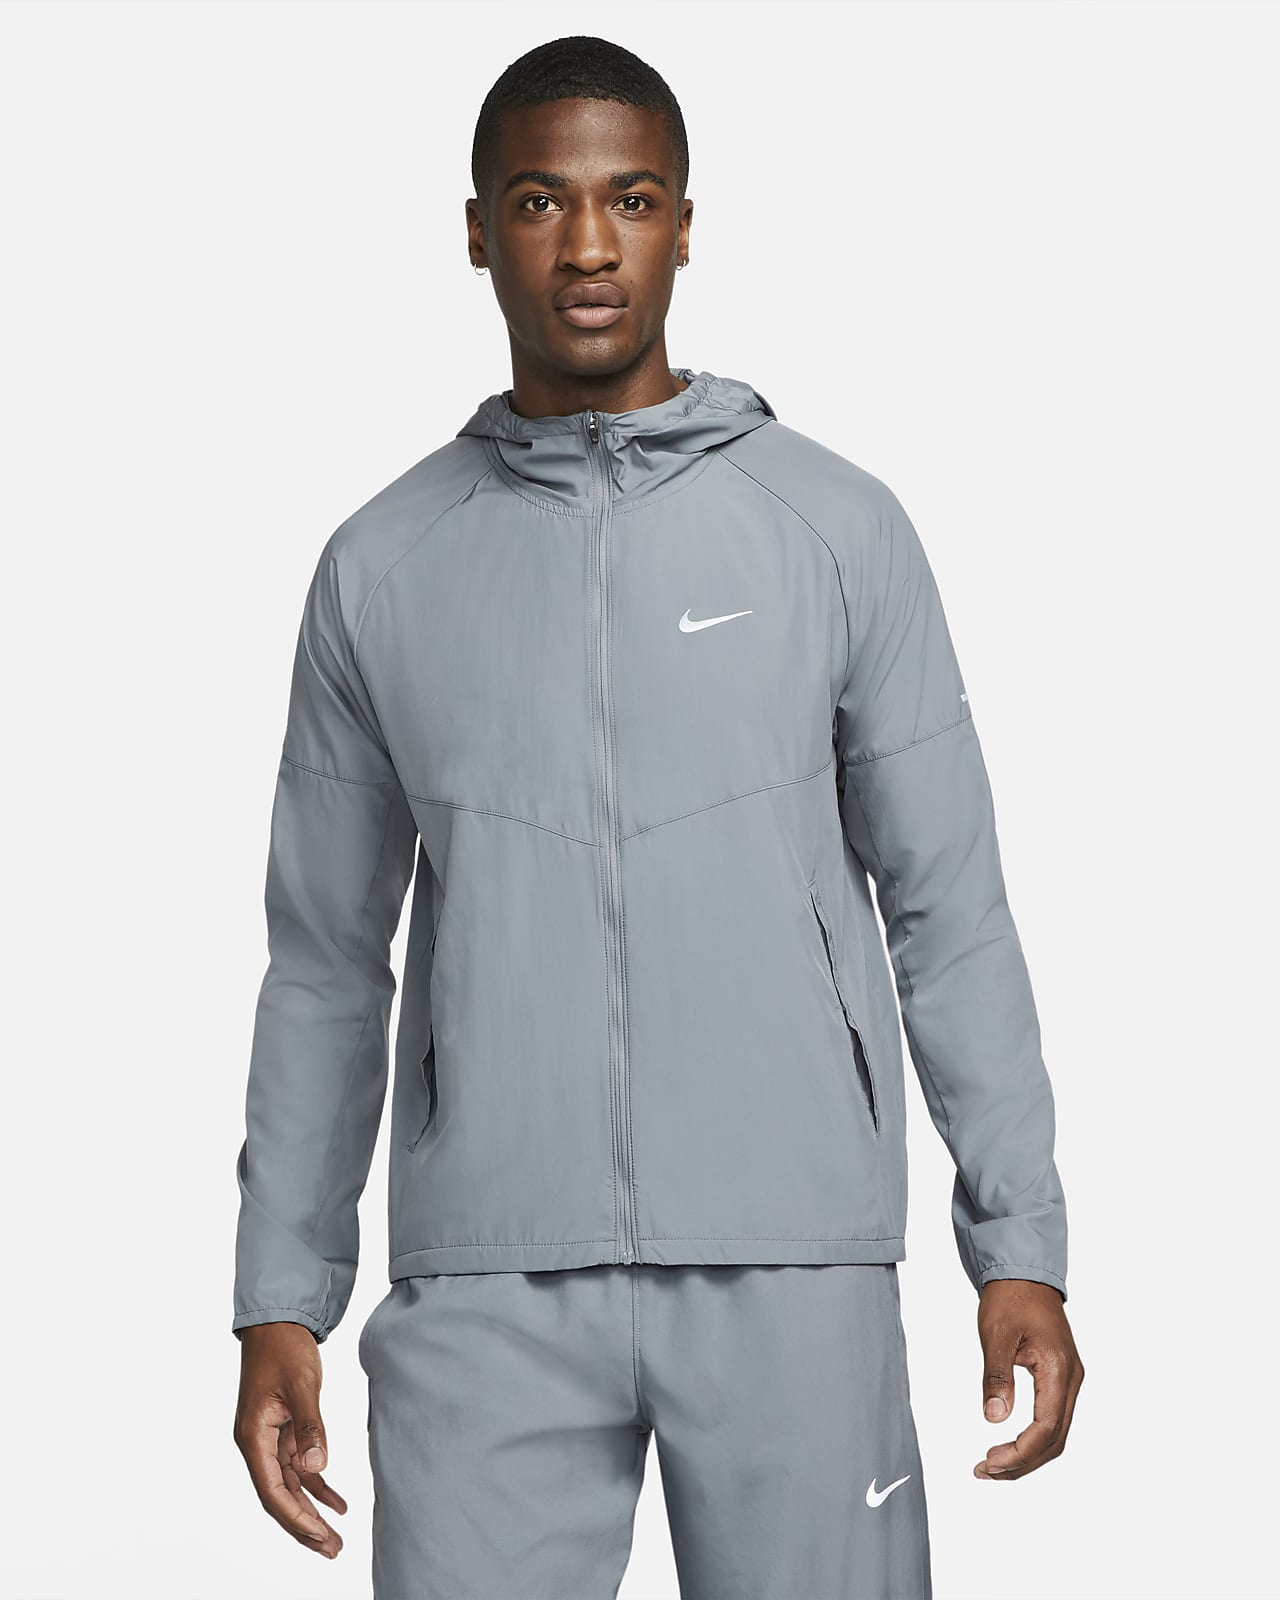 Buy Nike Dri-Fit Woven Training Jacket Boys Black online | Tennis Point COM